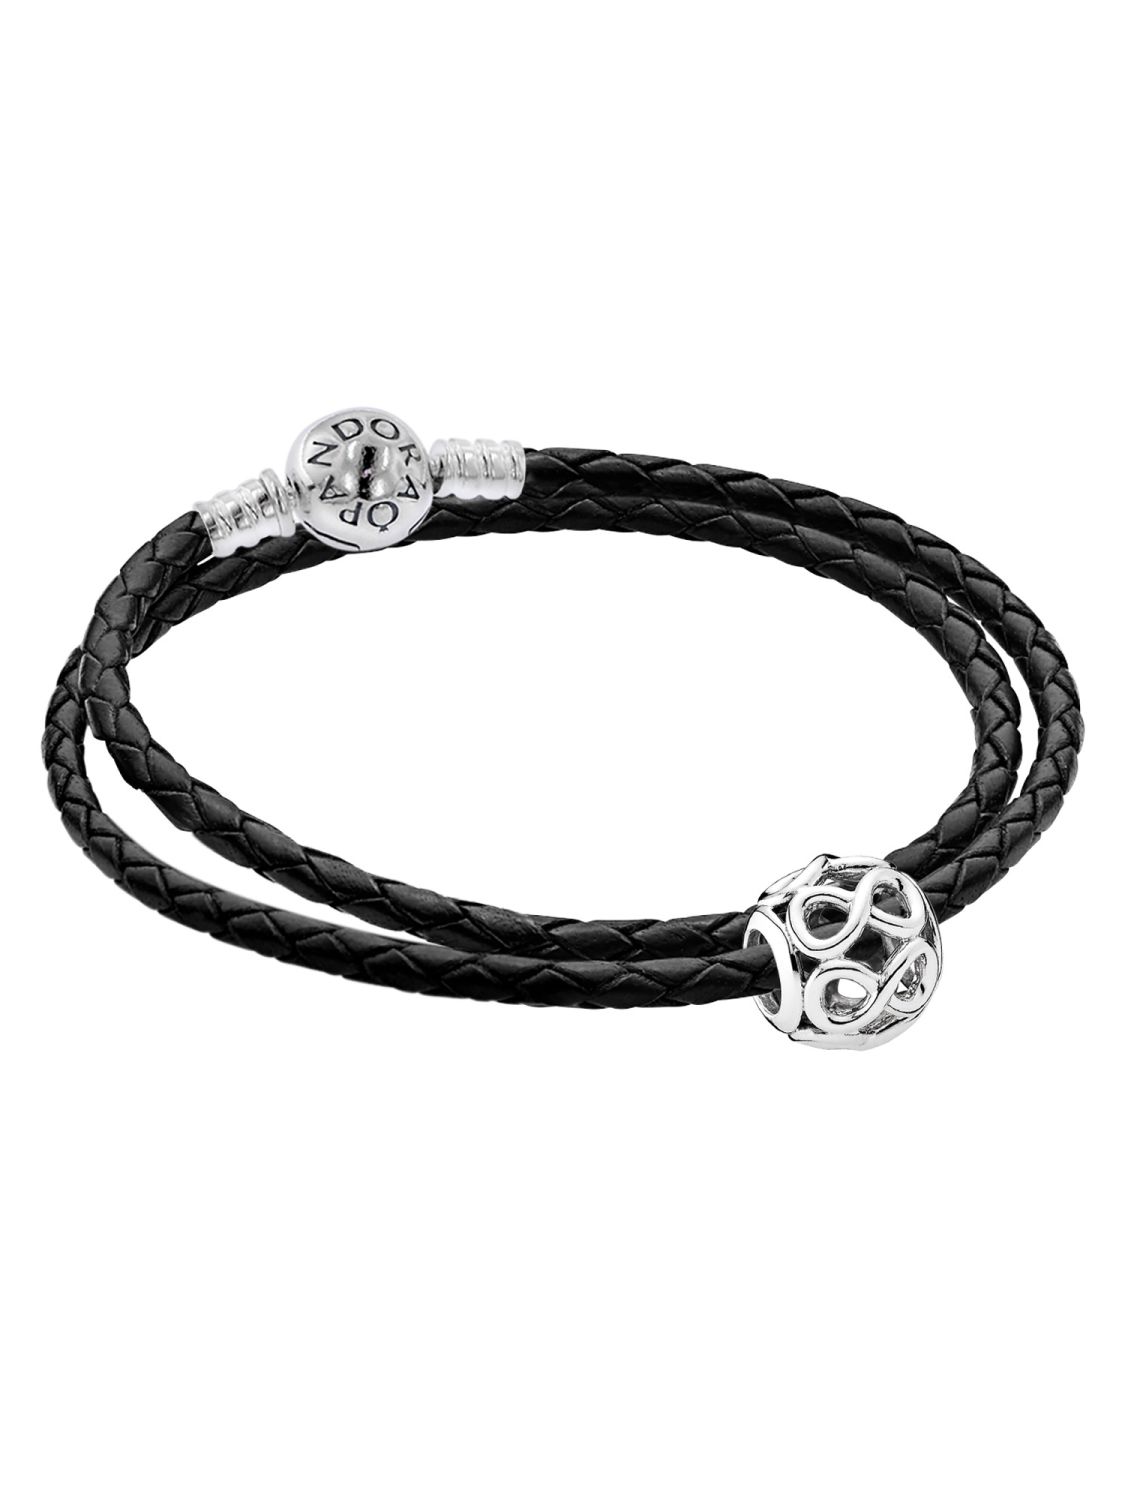 Men Jewelry Black Leather Bracelet Oxidized Sterling Silver Brutalist  Birthday Gift for Boyfriend SB00009 - Etsy